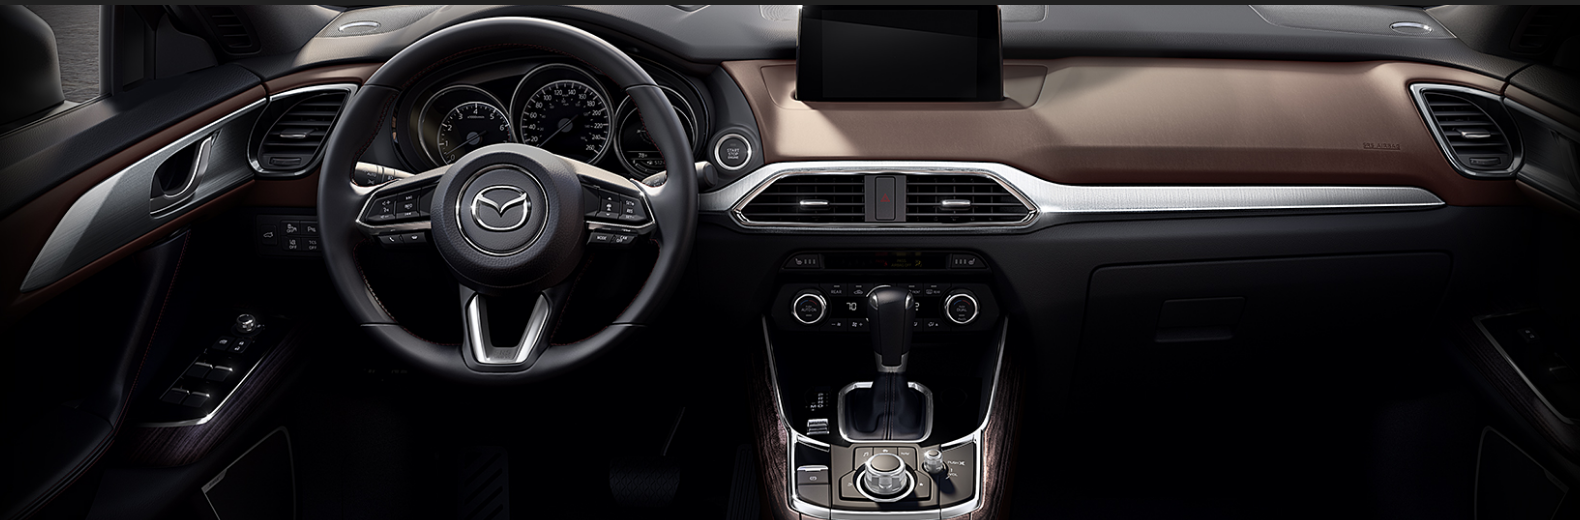 2016 Mazda CX-9 Interior Dashboard